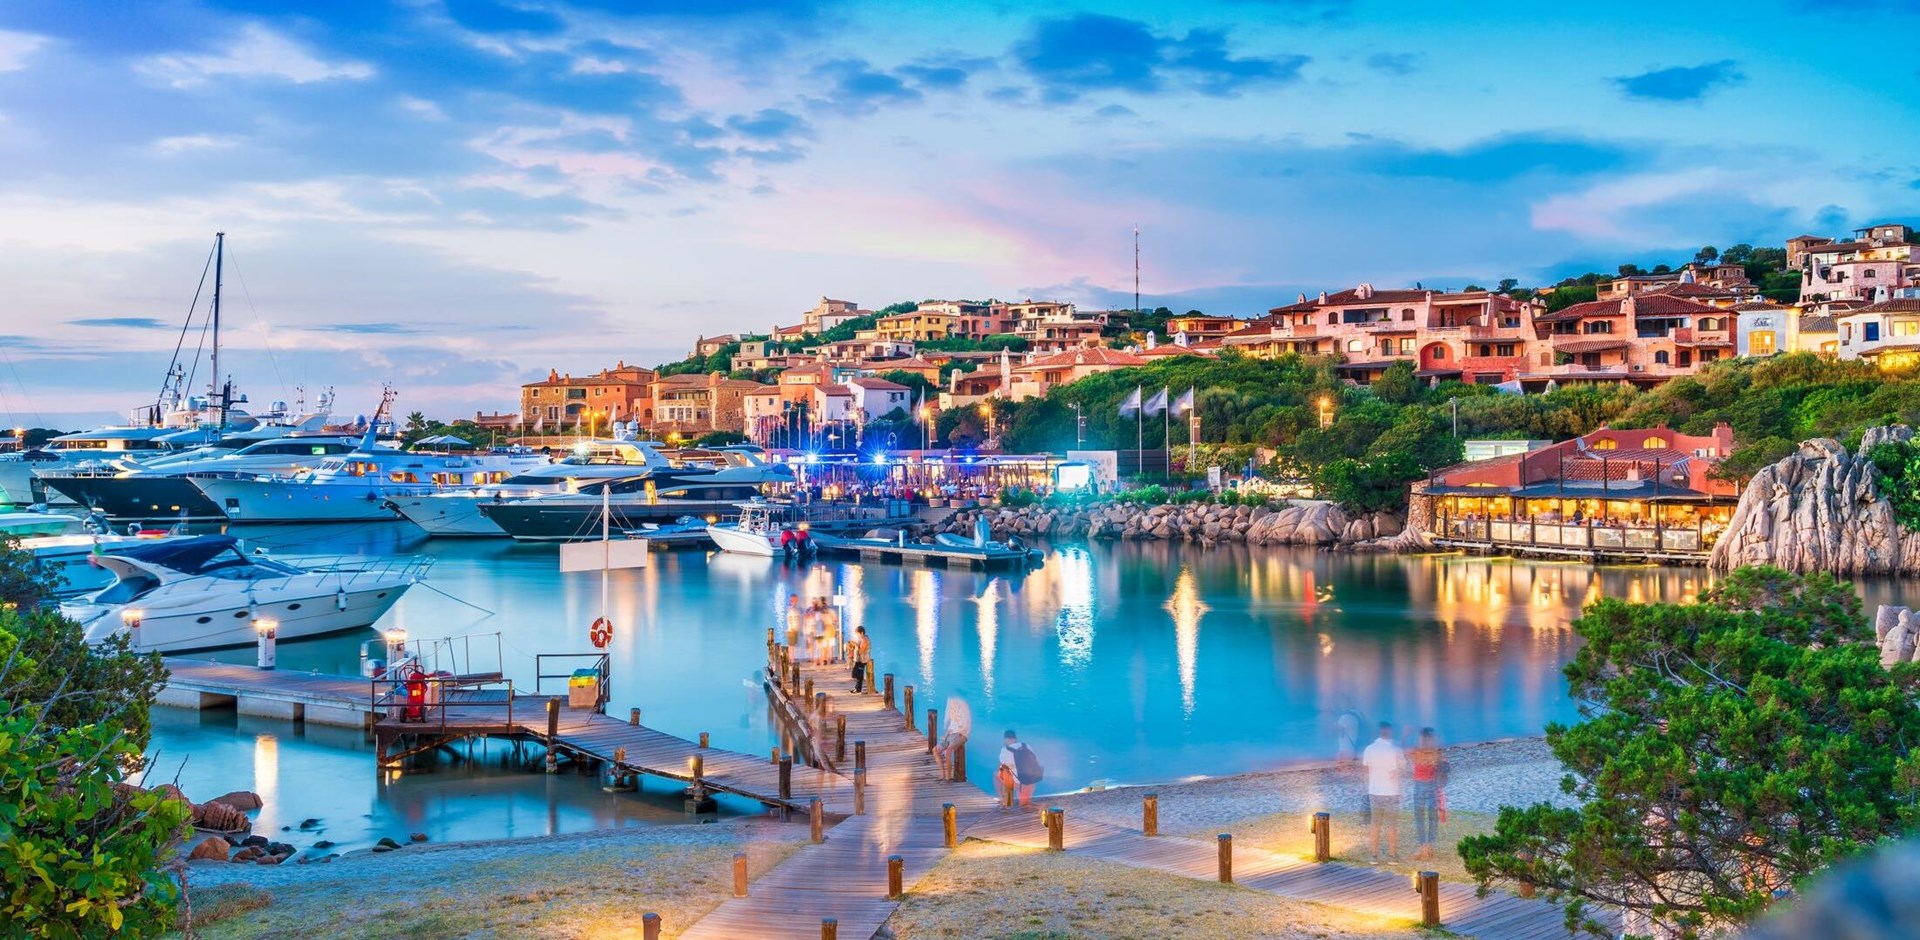 View of harbor and village Porto Cervo, Sardinia island, Italy